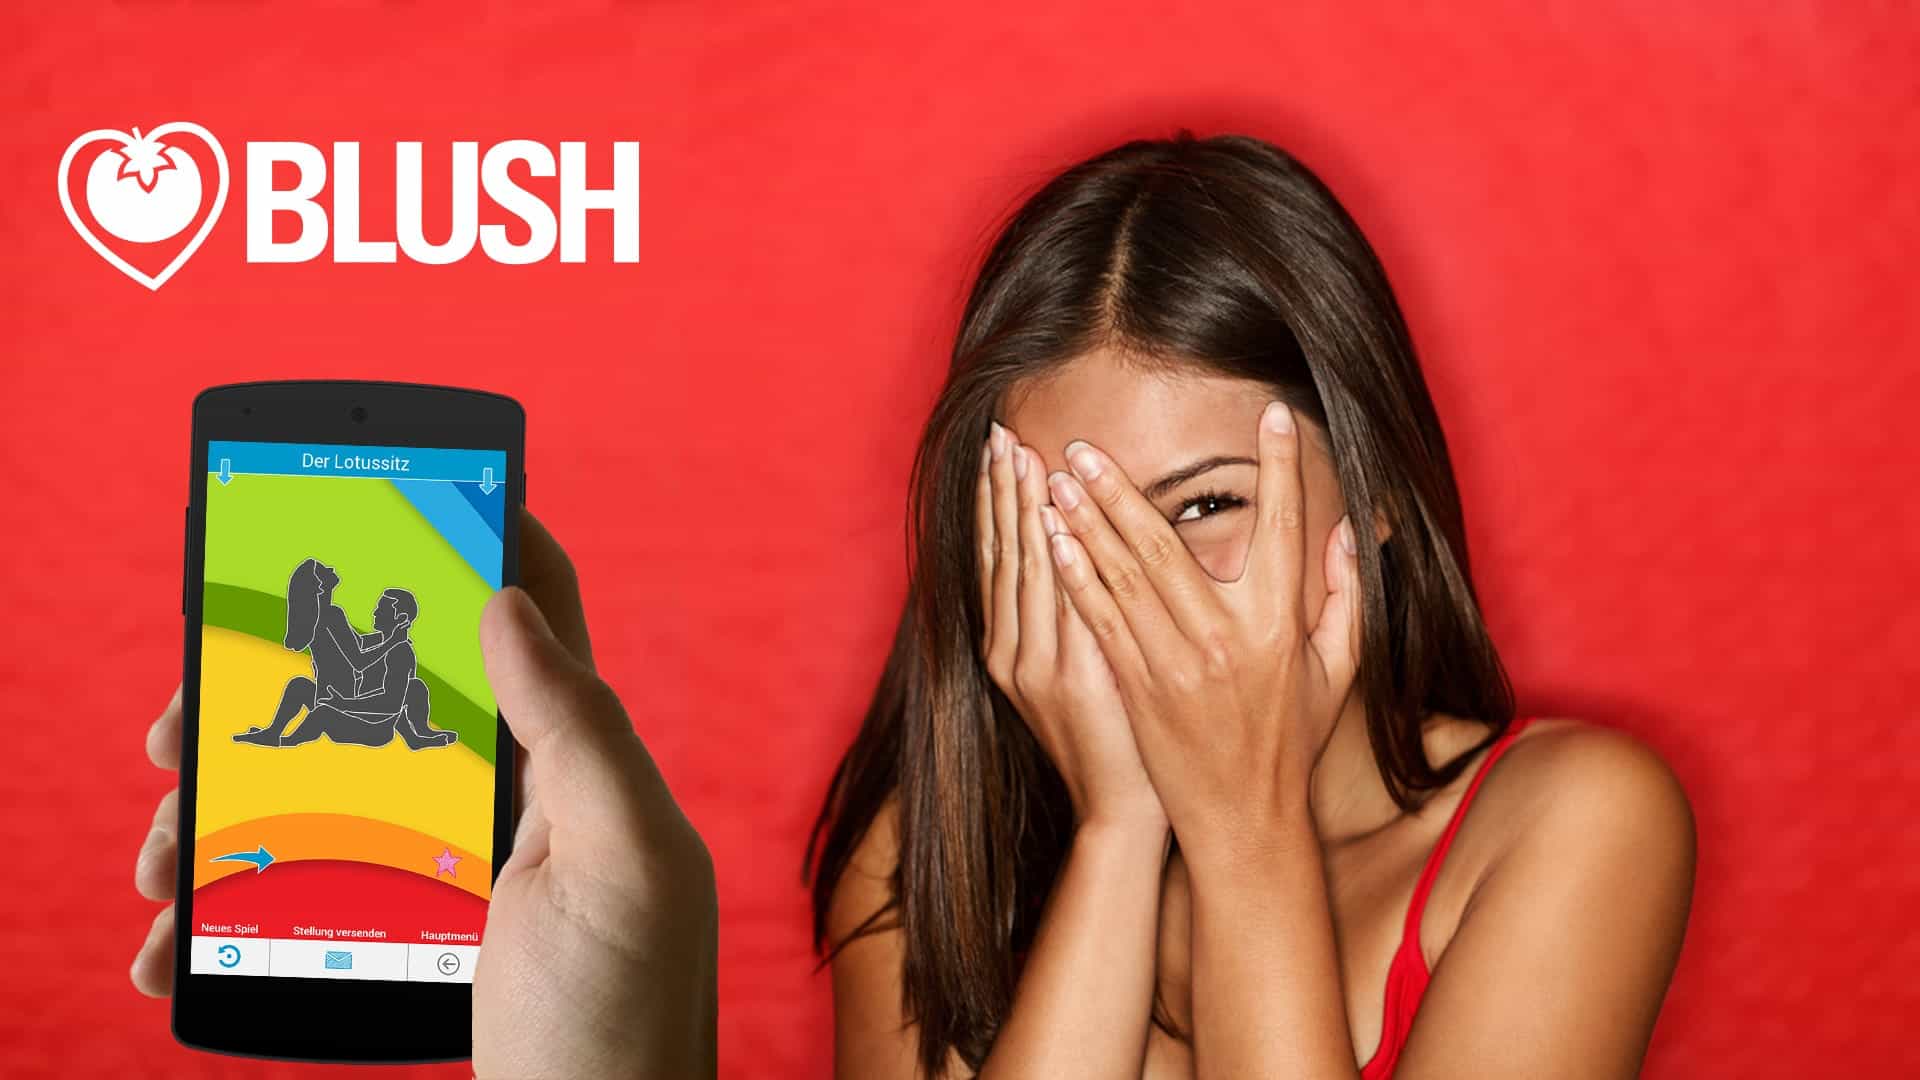 BLUSH – Baby lass uns Sex haben! Android App